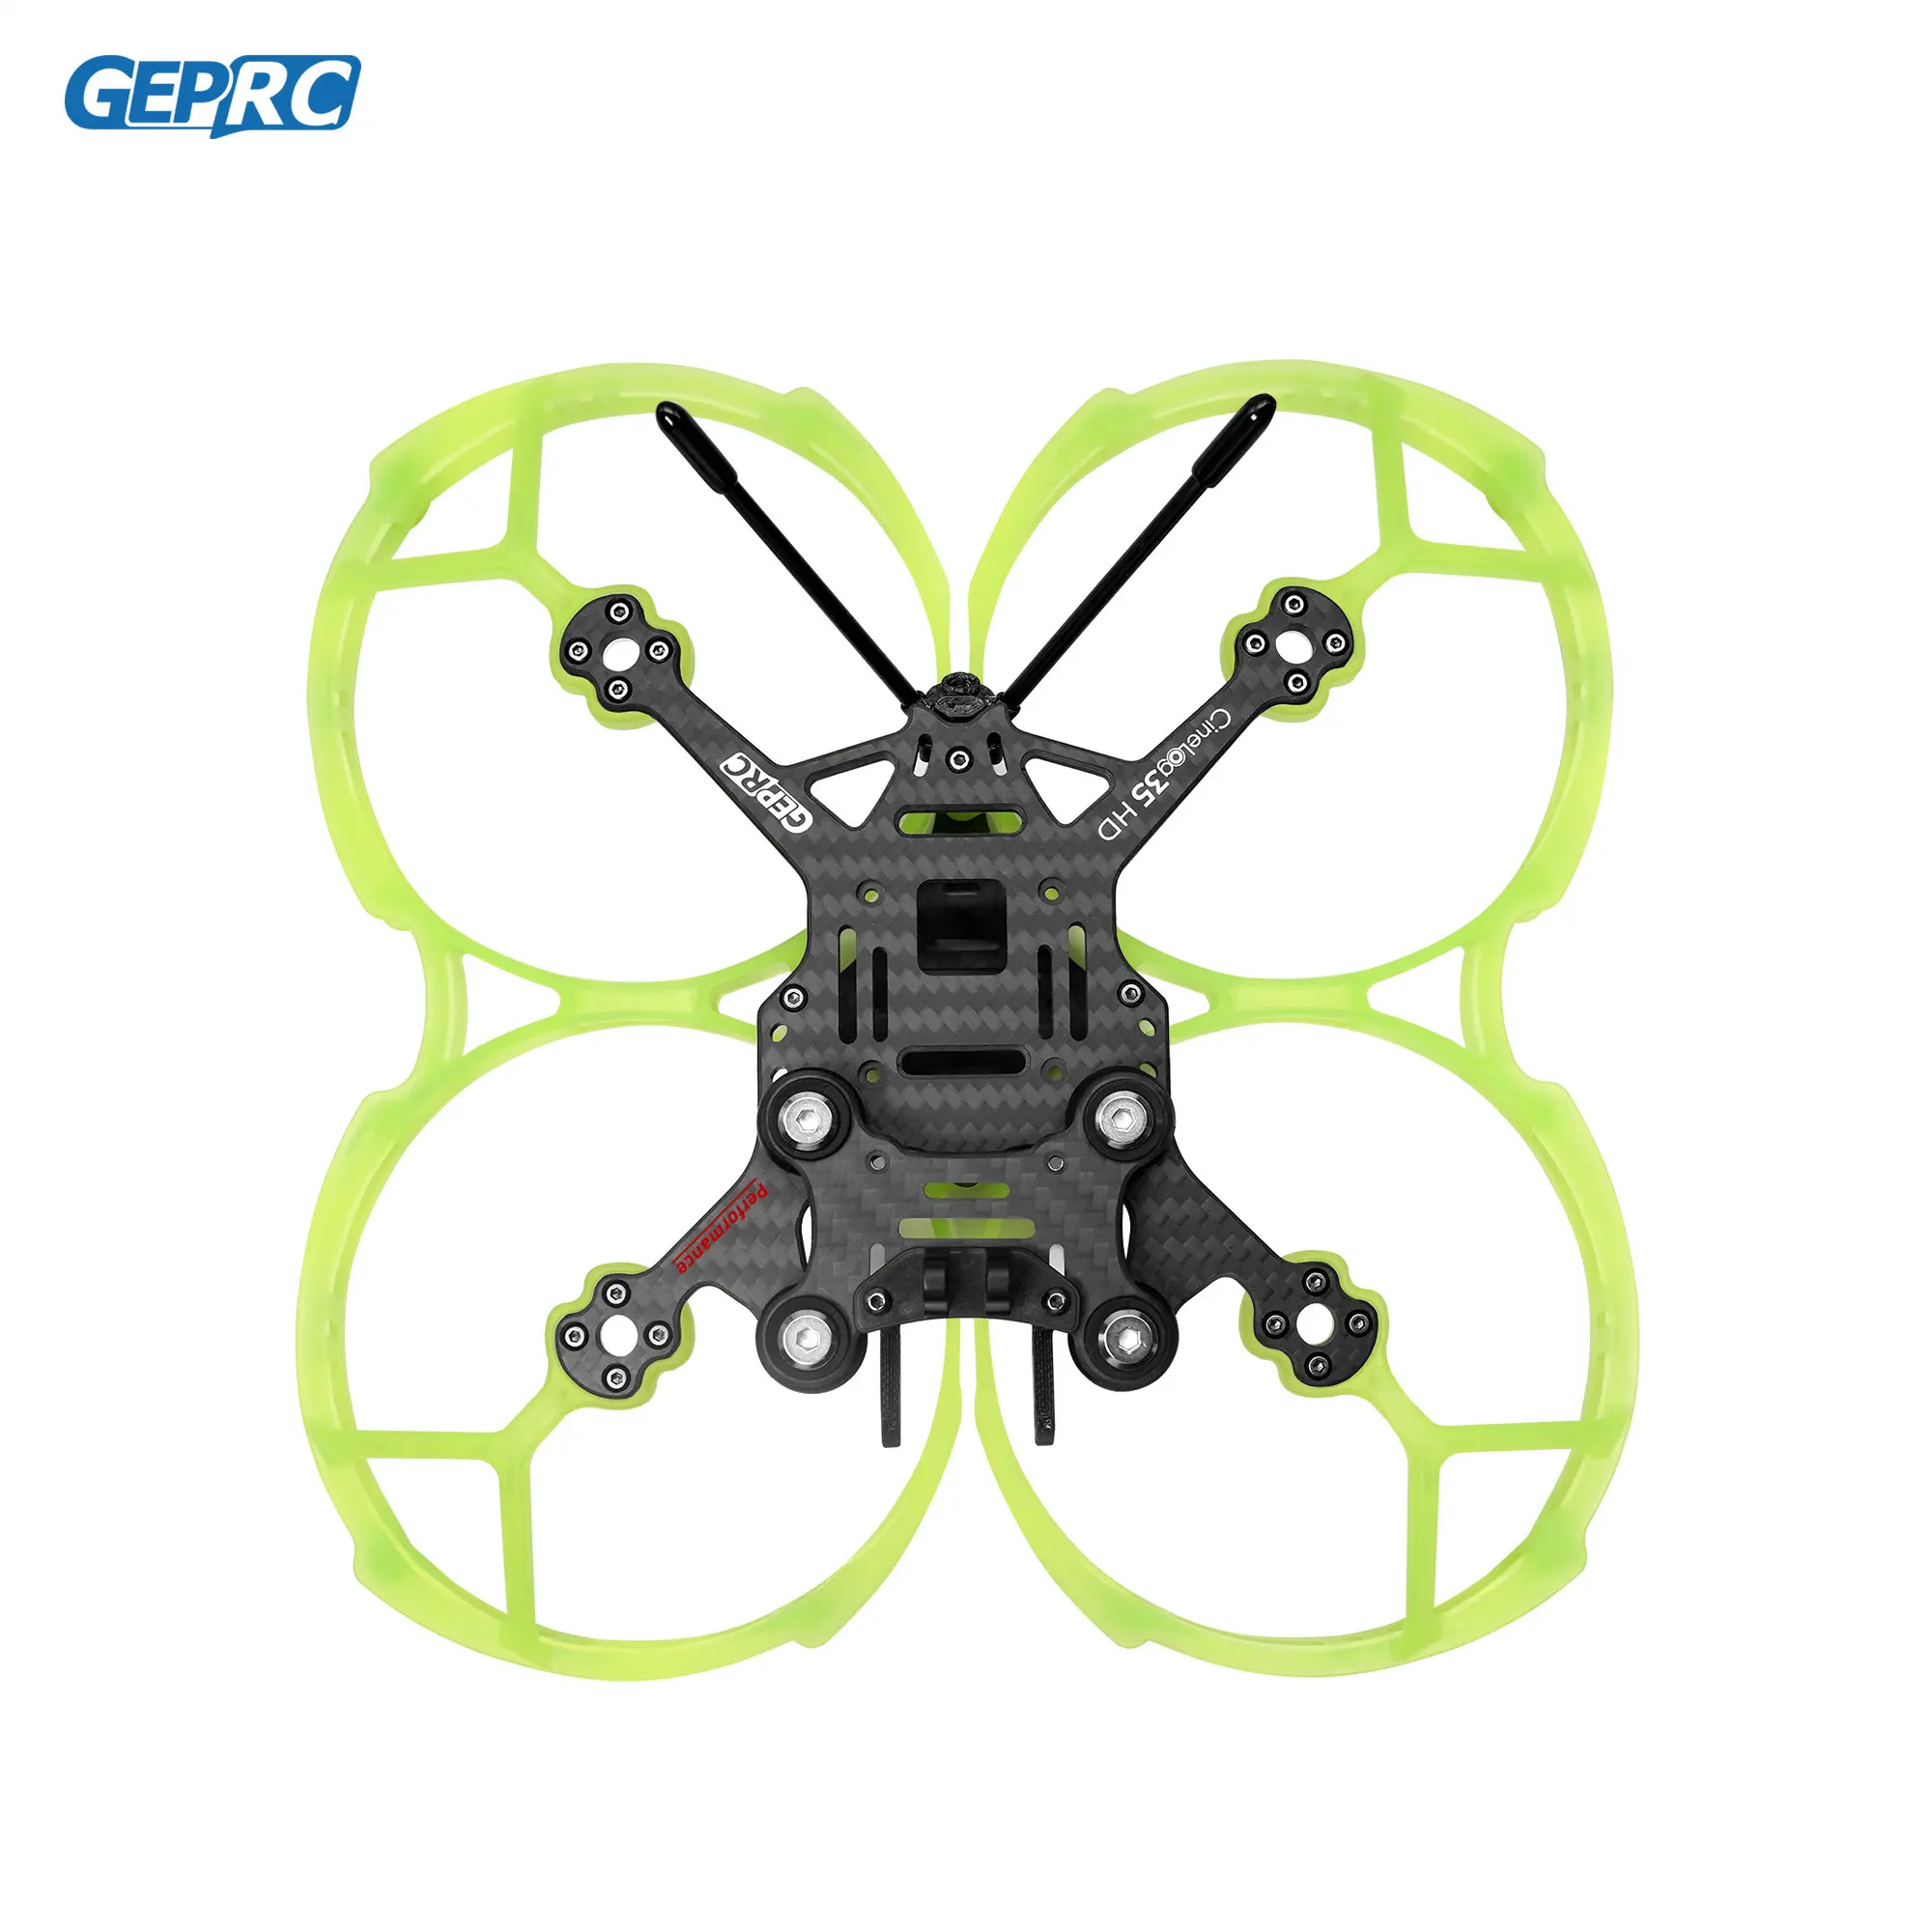 geprc-gep-cl35-performance-frame-suitable-cinelog35-series-drone-carbon-fiber-rc-fpv-quadcopter-replacement-accessories-parts